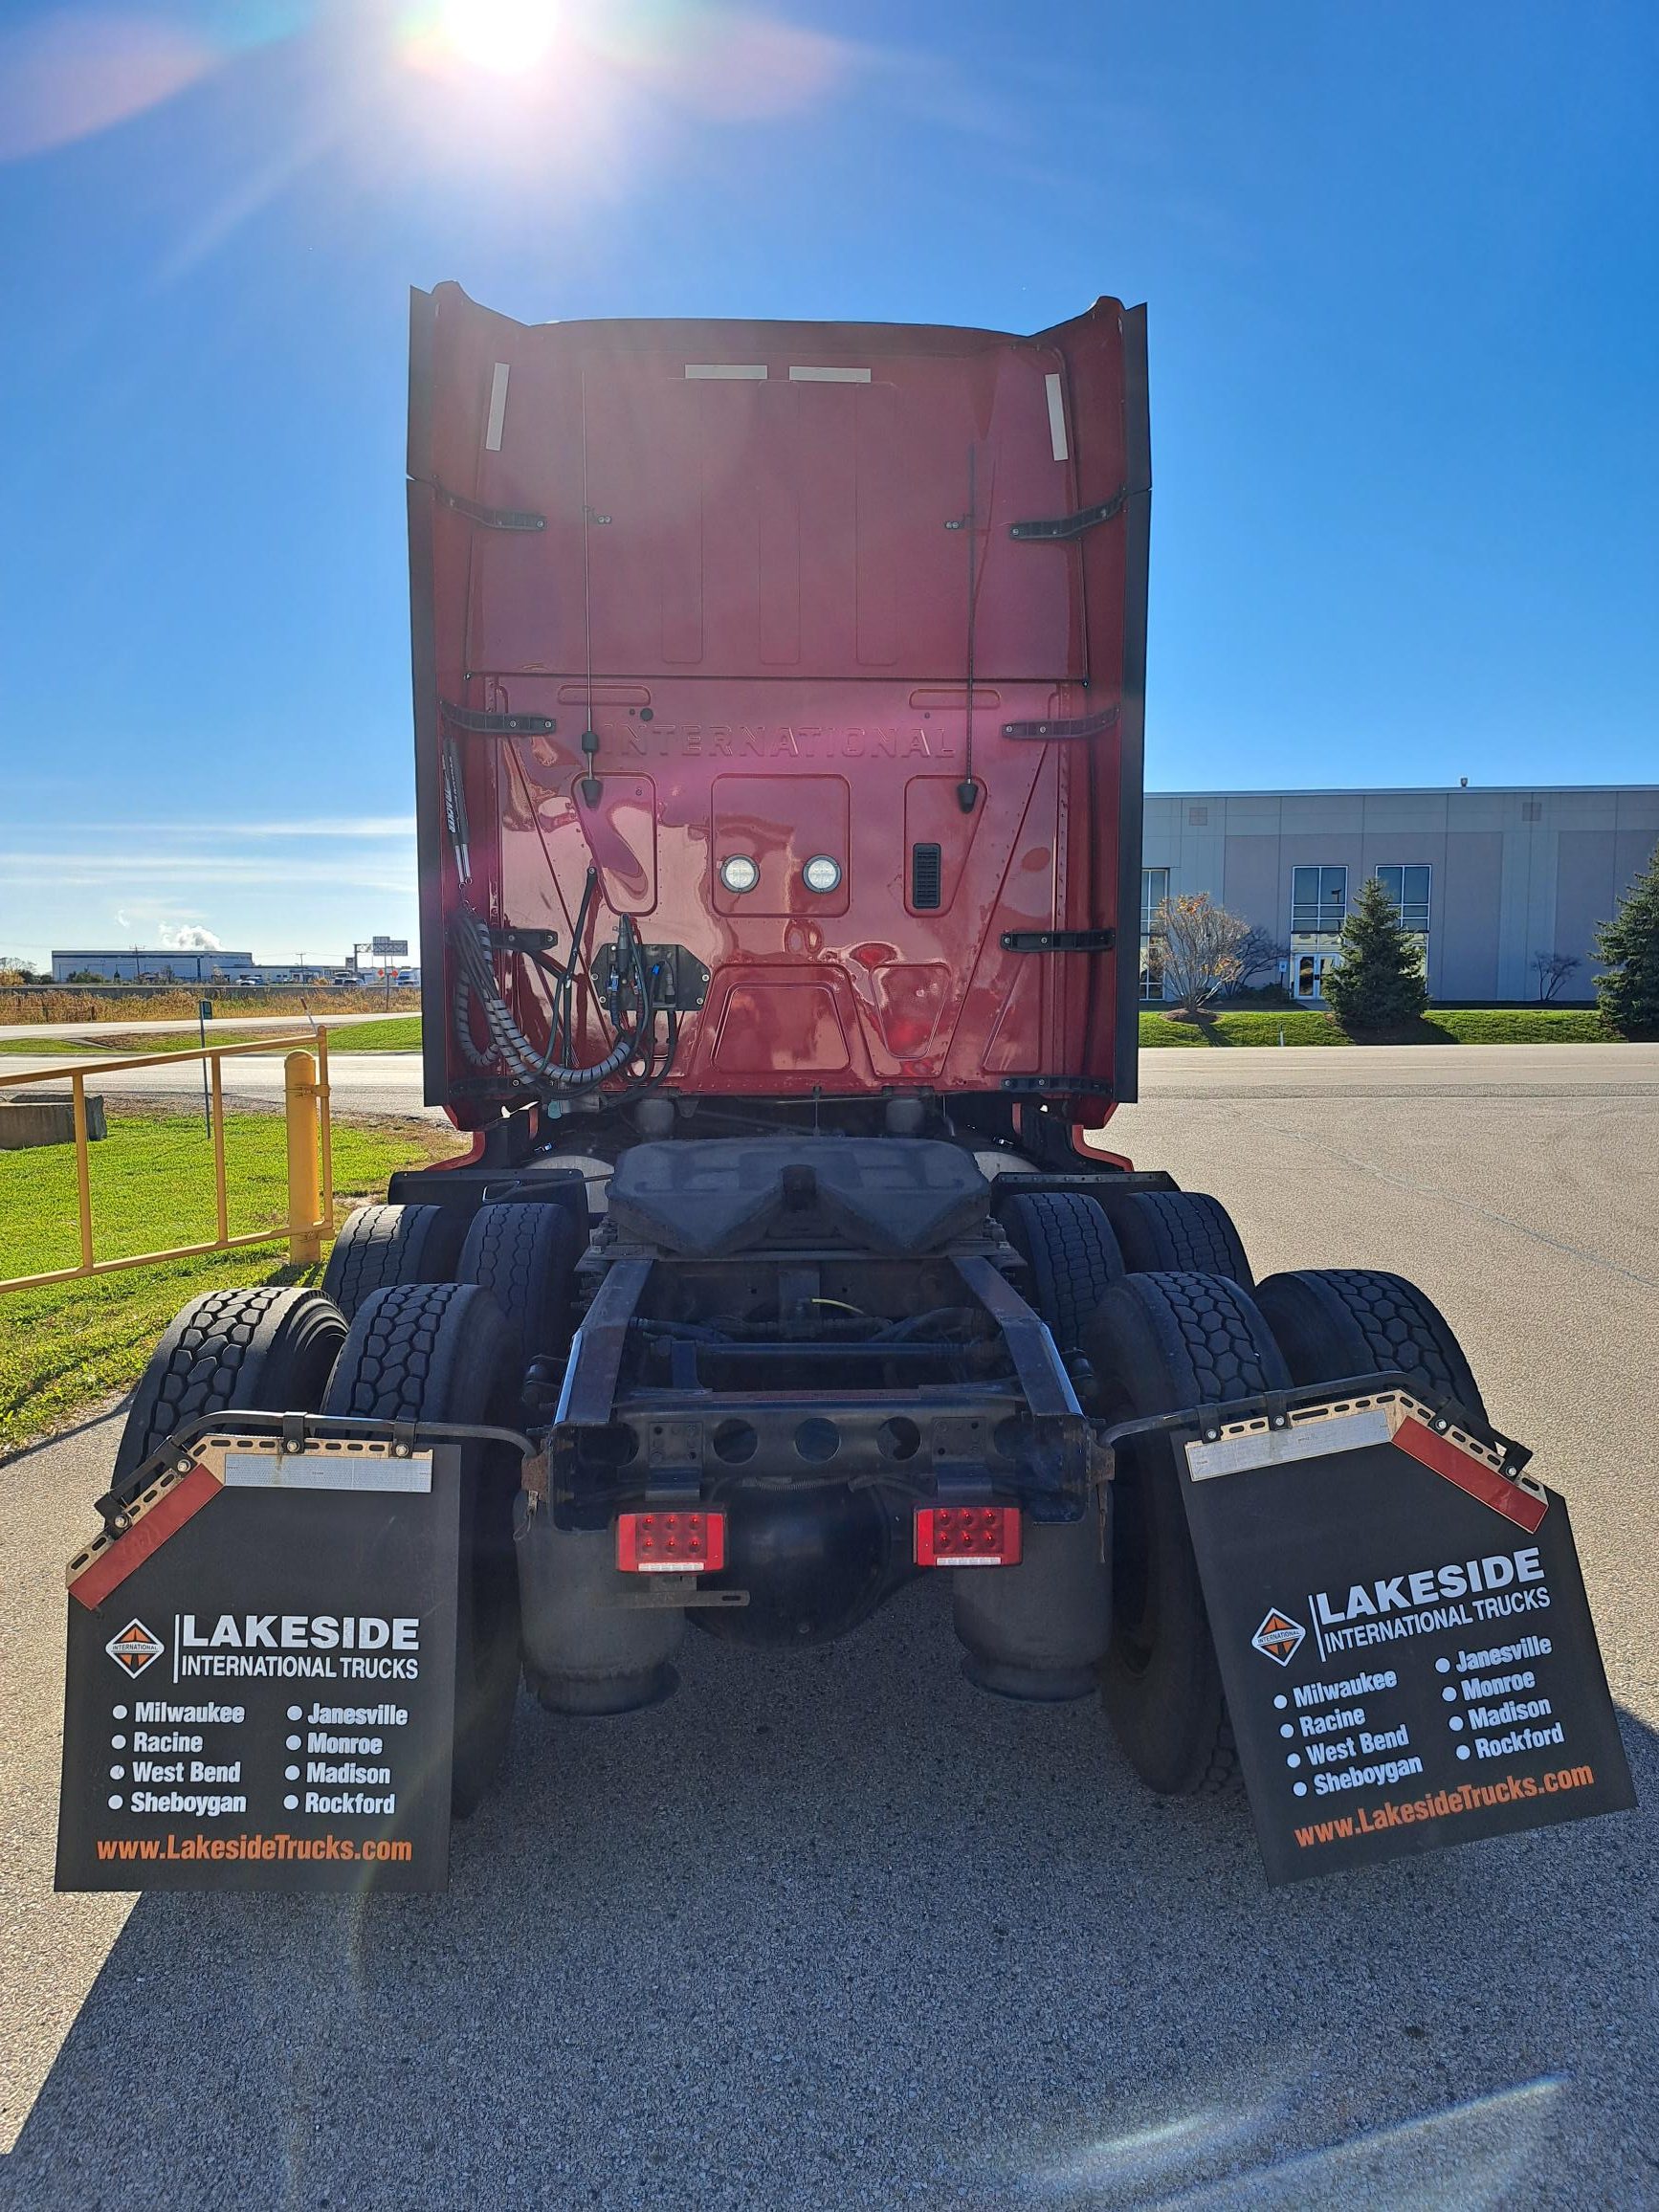 2018 INTERNATIONAL LT625 - Lakeside International Trucks